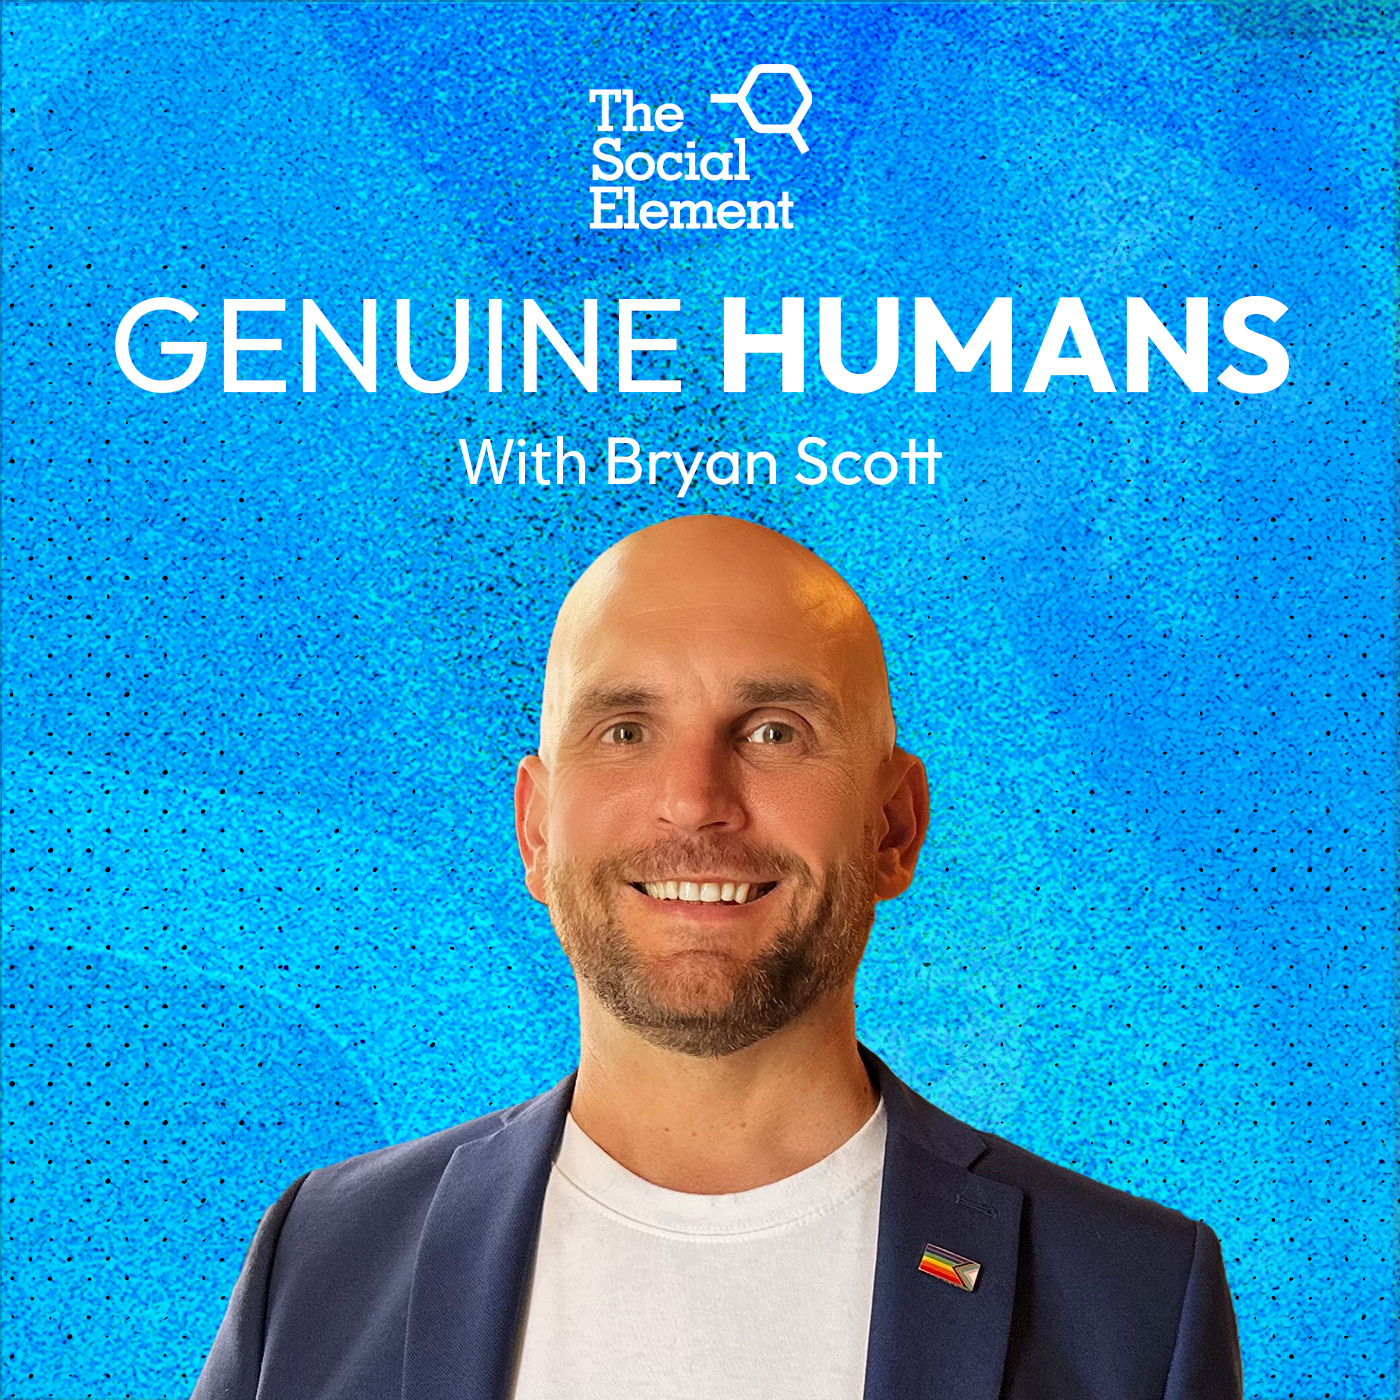 Bryan Scott: The power of persuasive leadership